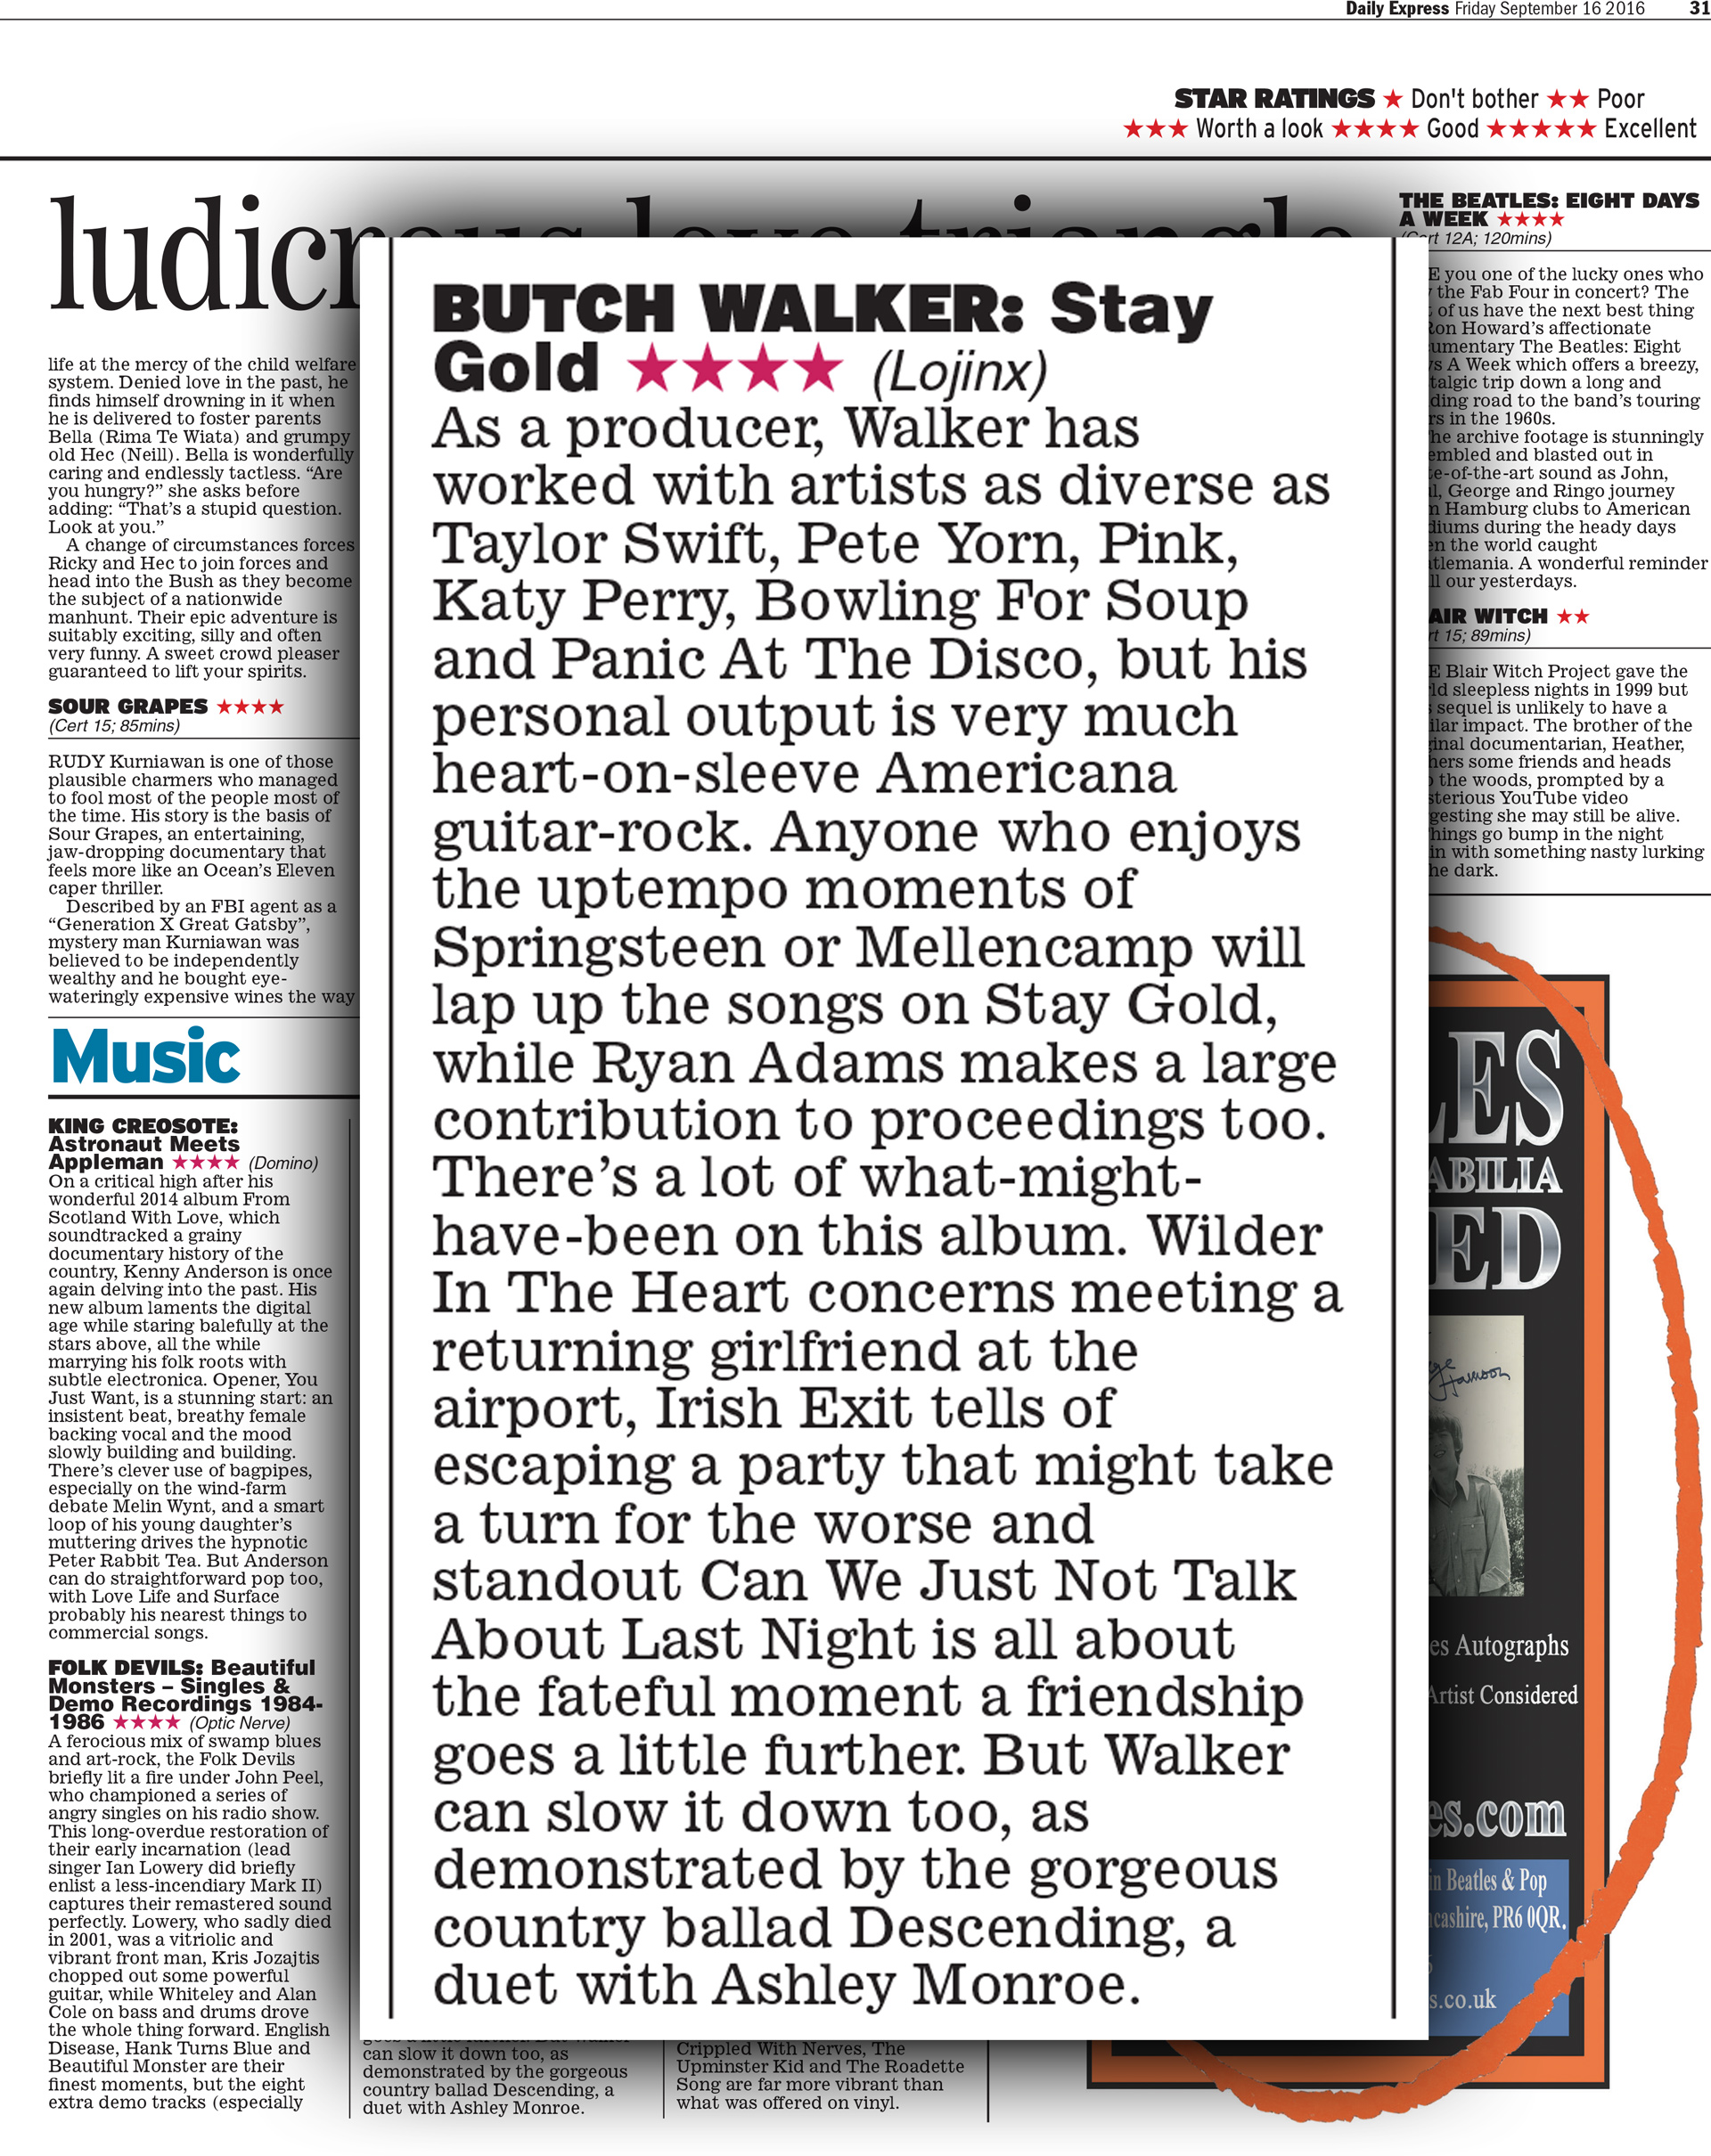 Butch Walker Daily Express Review (Lojinx)